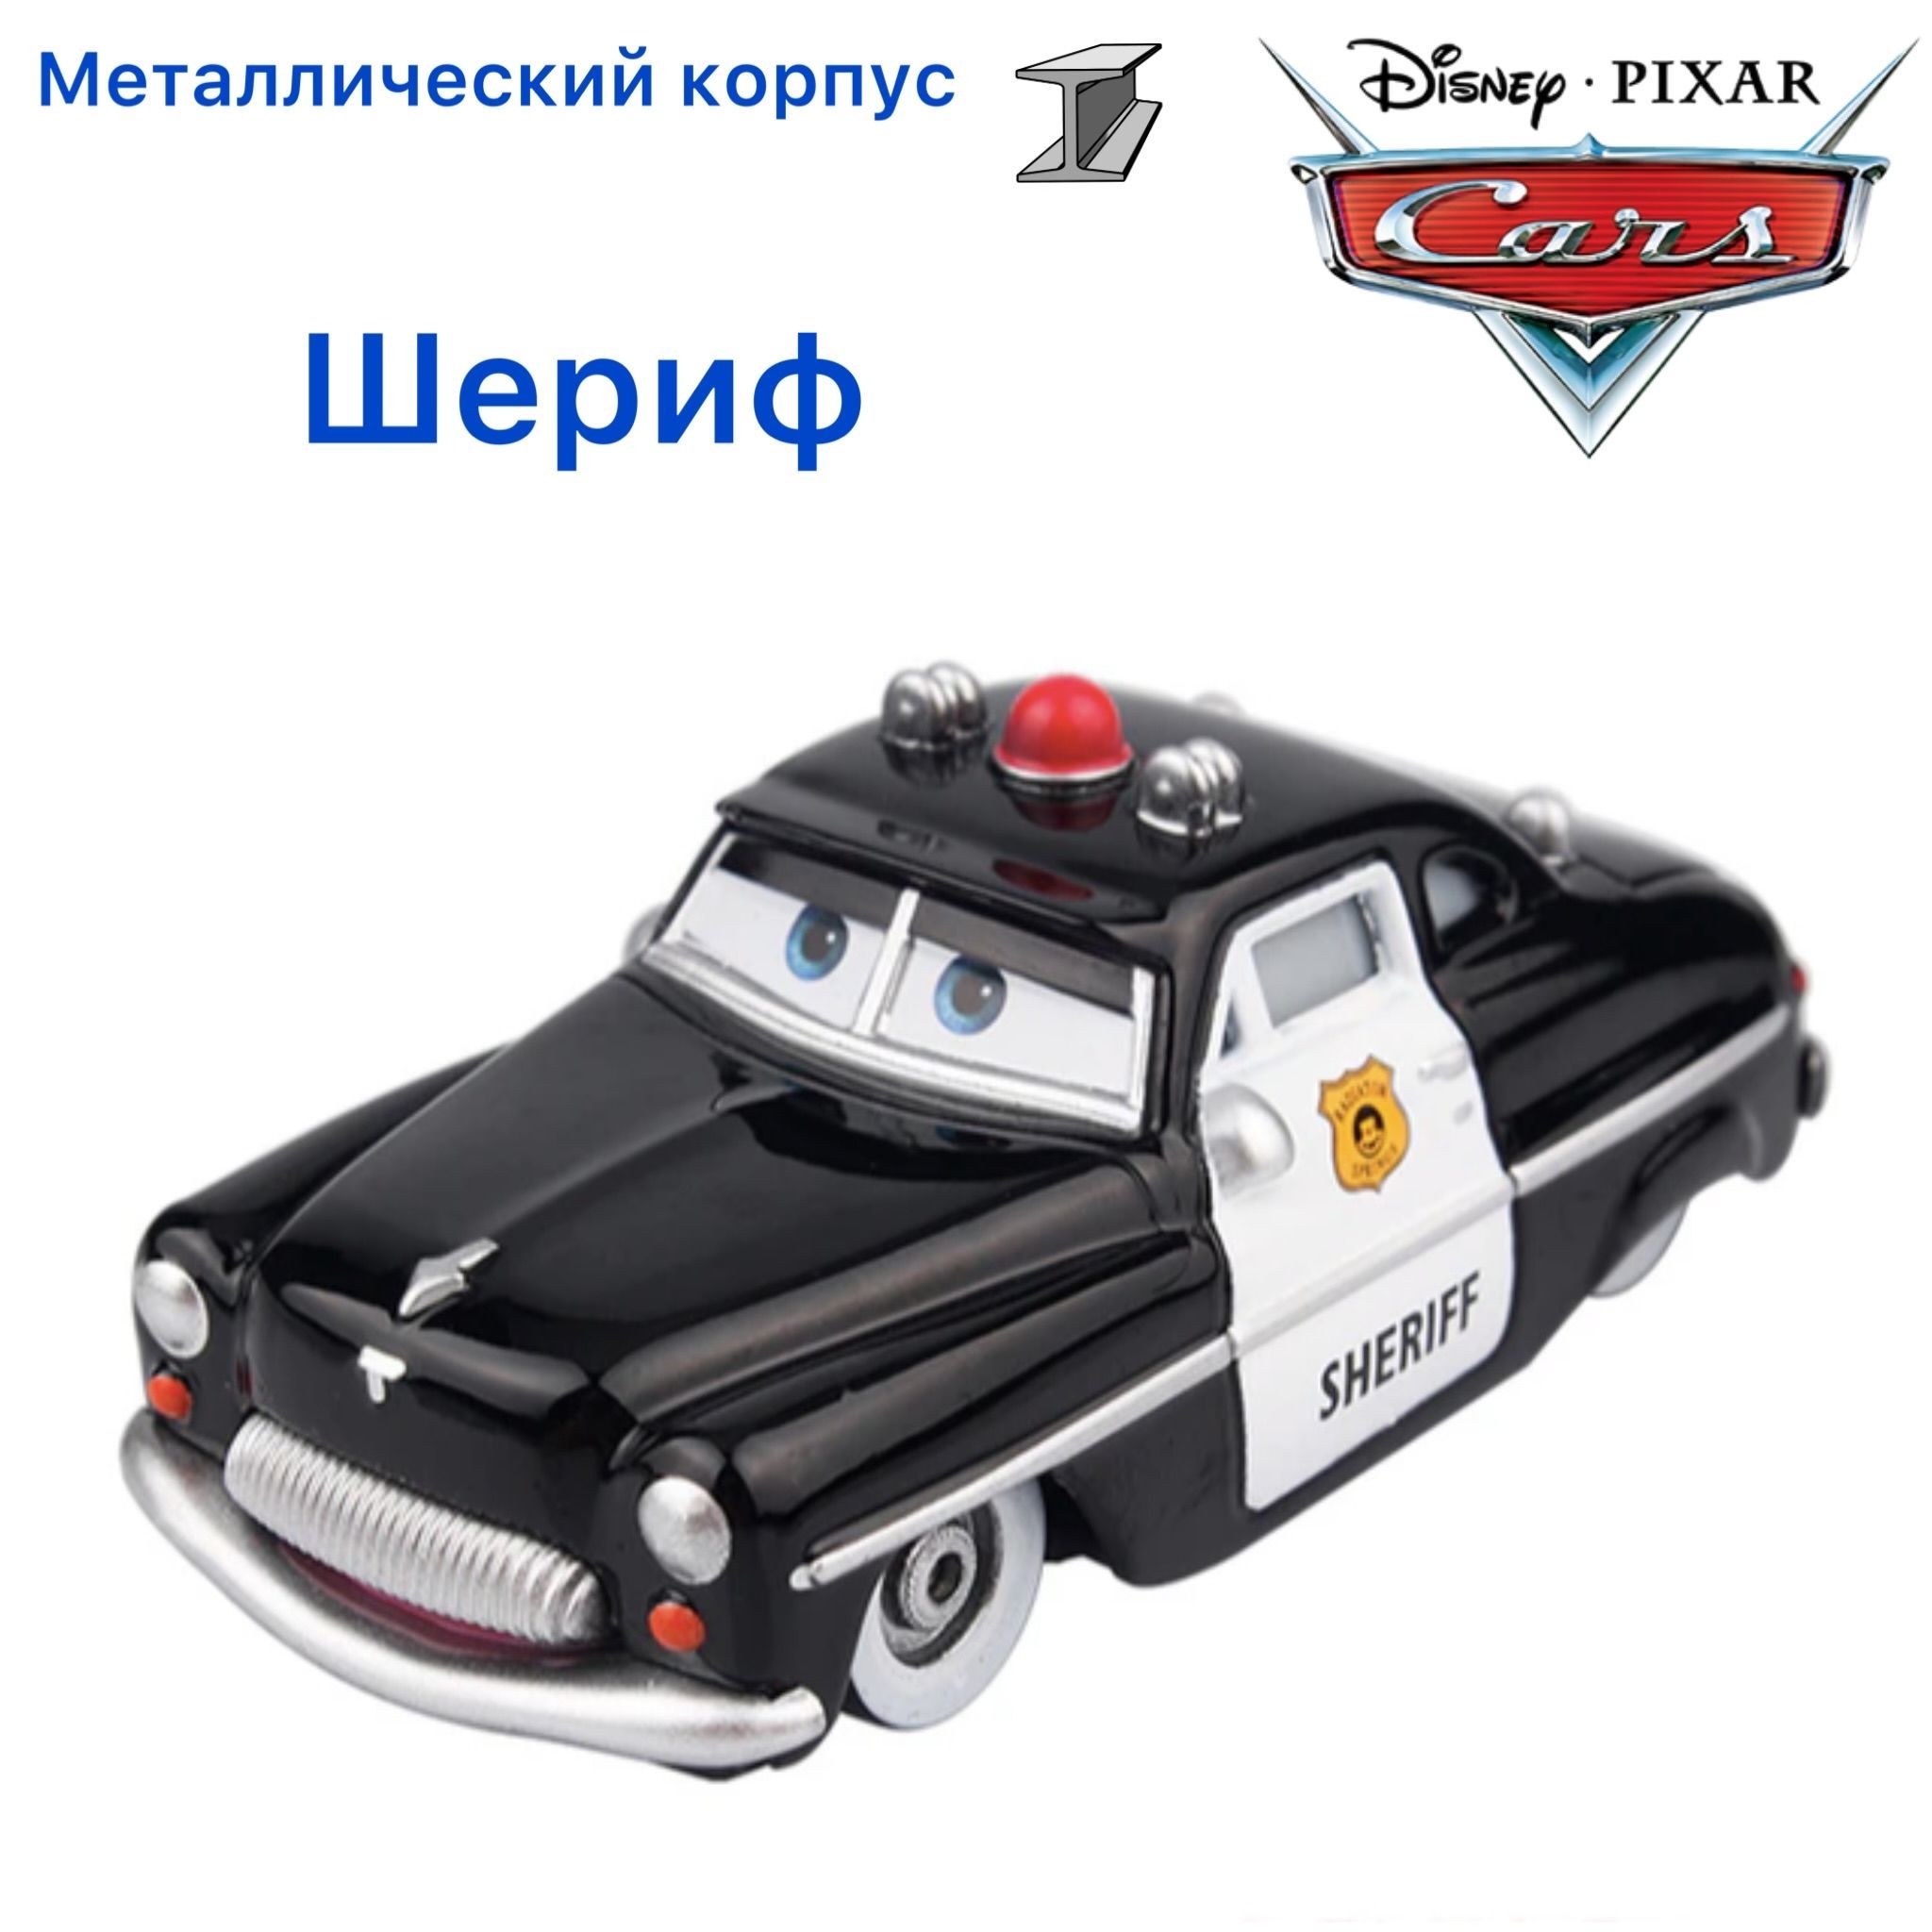 Тачки Шериф. Шериф из тачек. Cars Sheriff Toy. Toys Sheriff Metal car 1:40 1957.